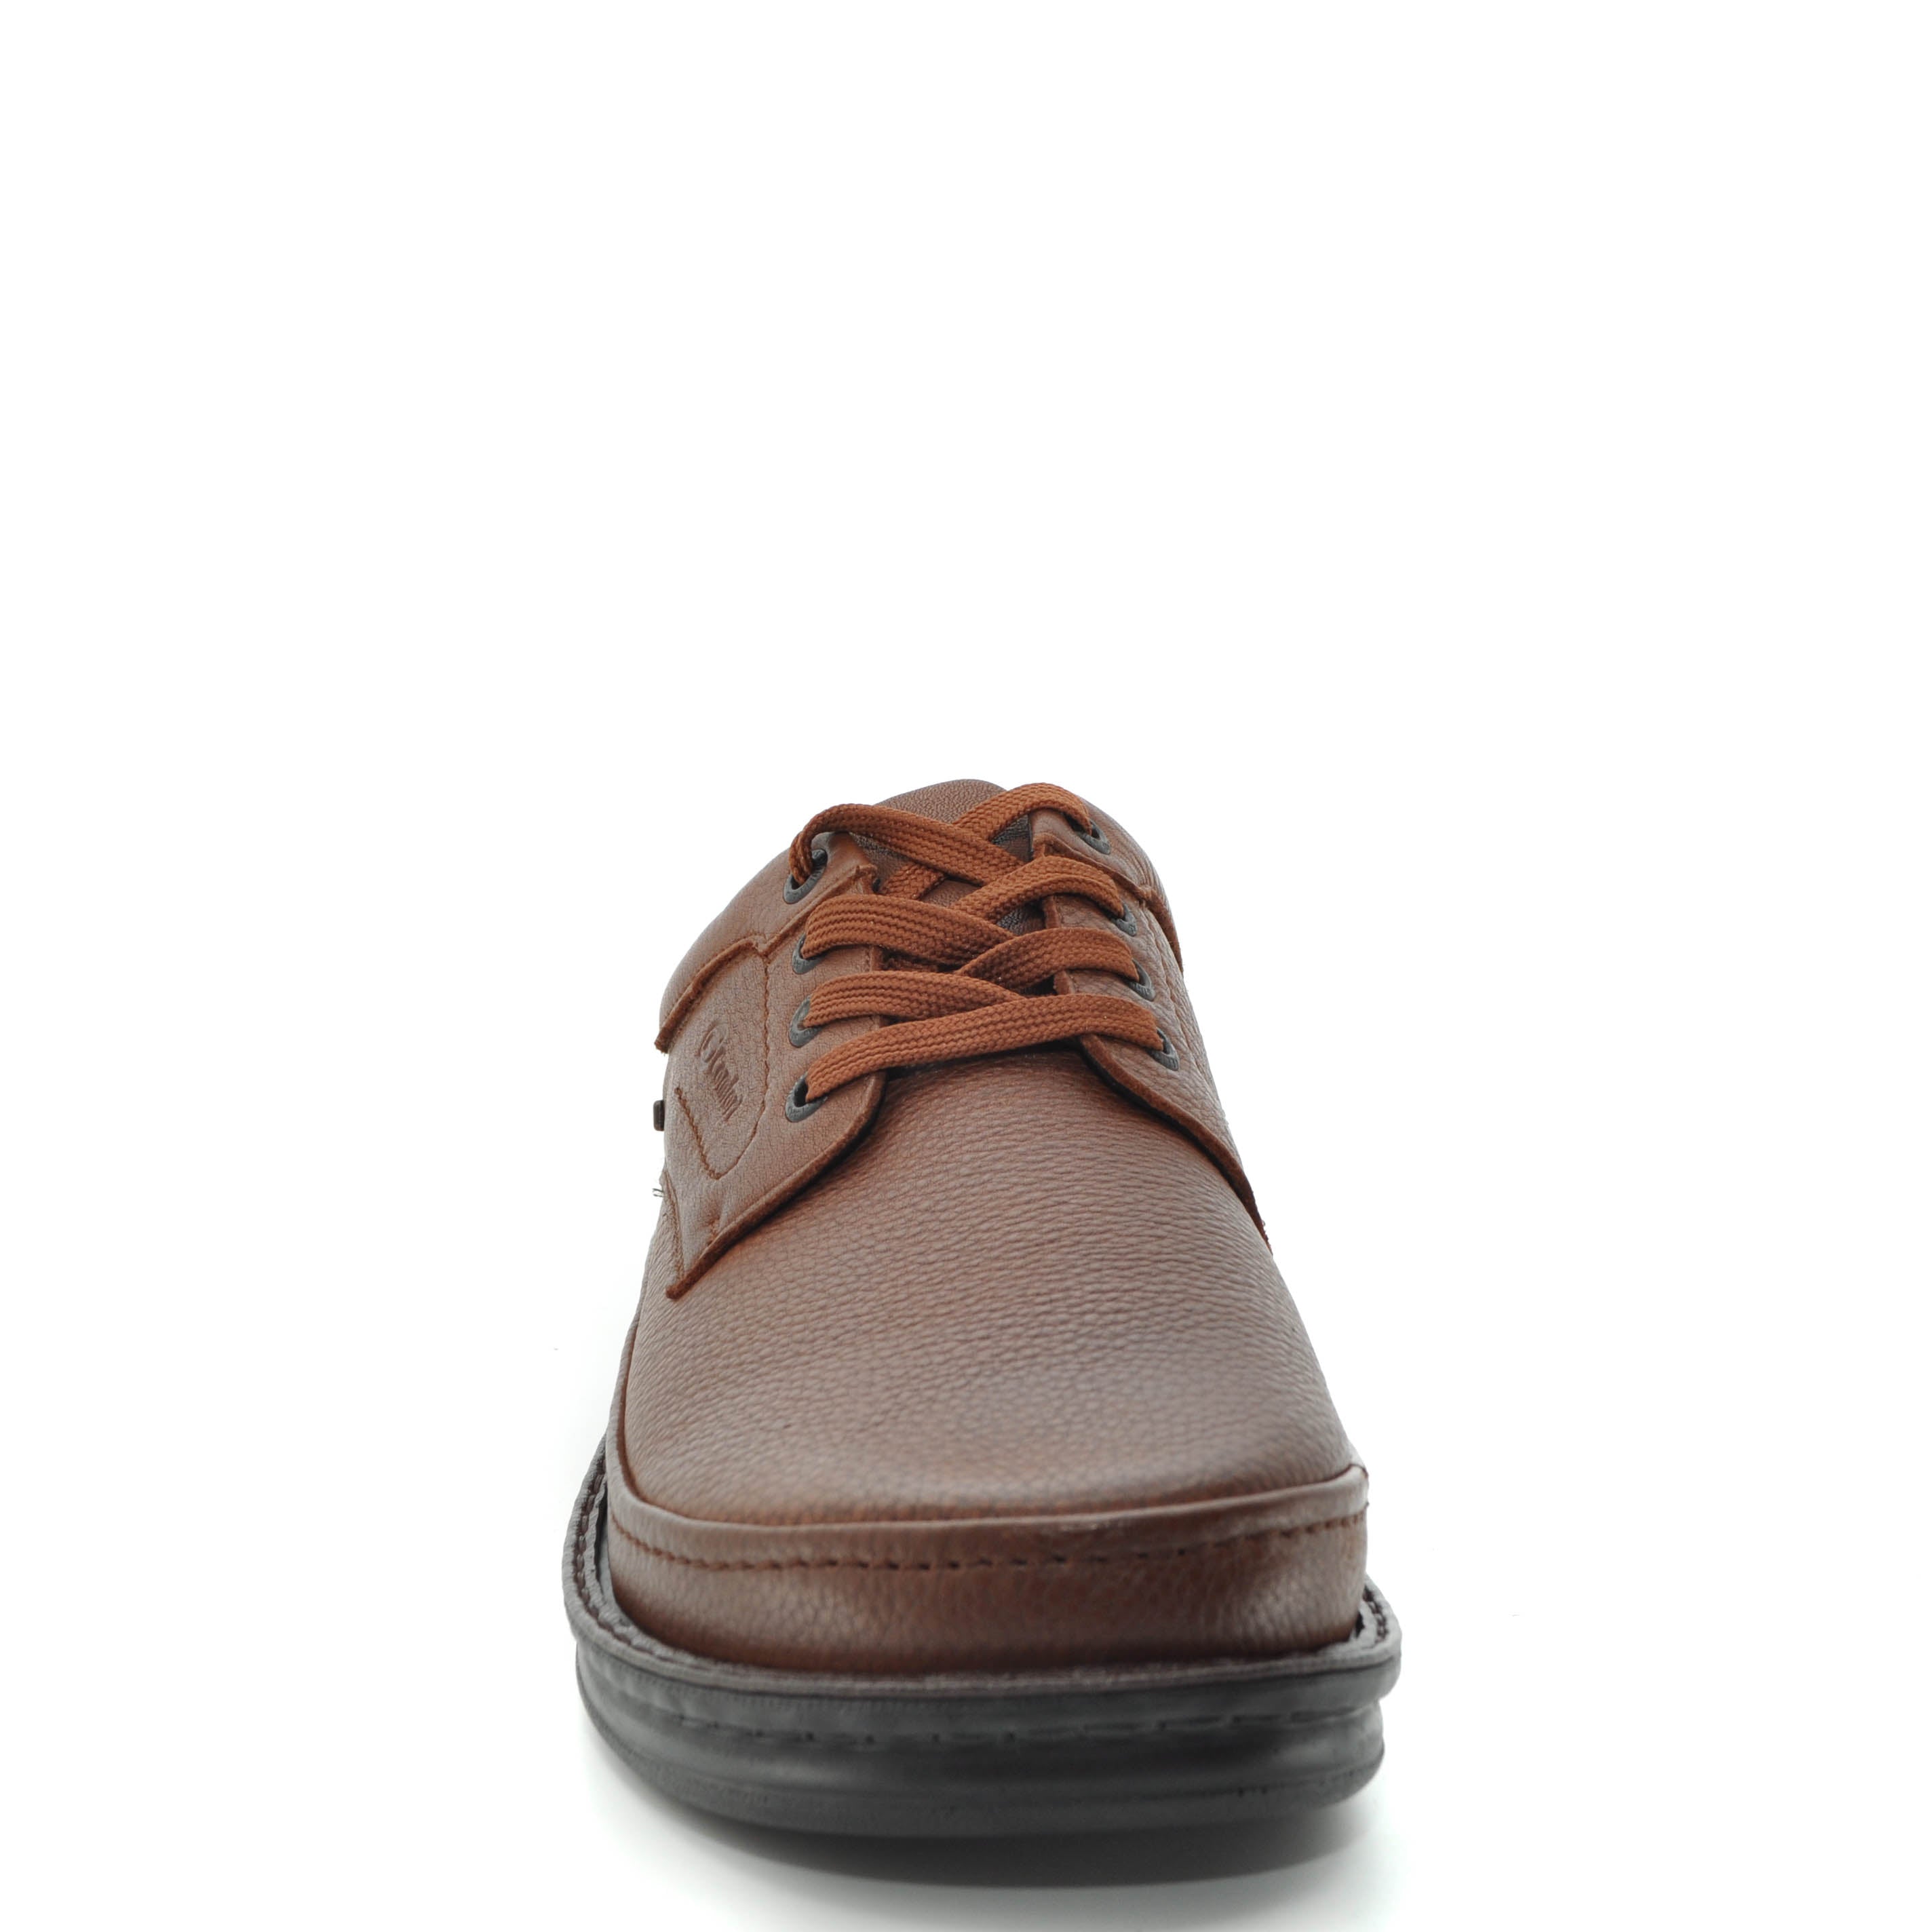 G comfort brown casual shoes men